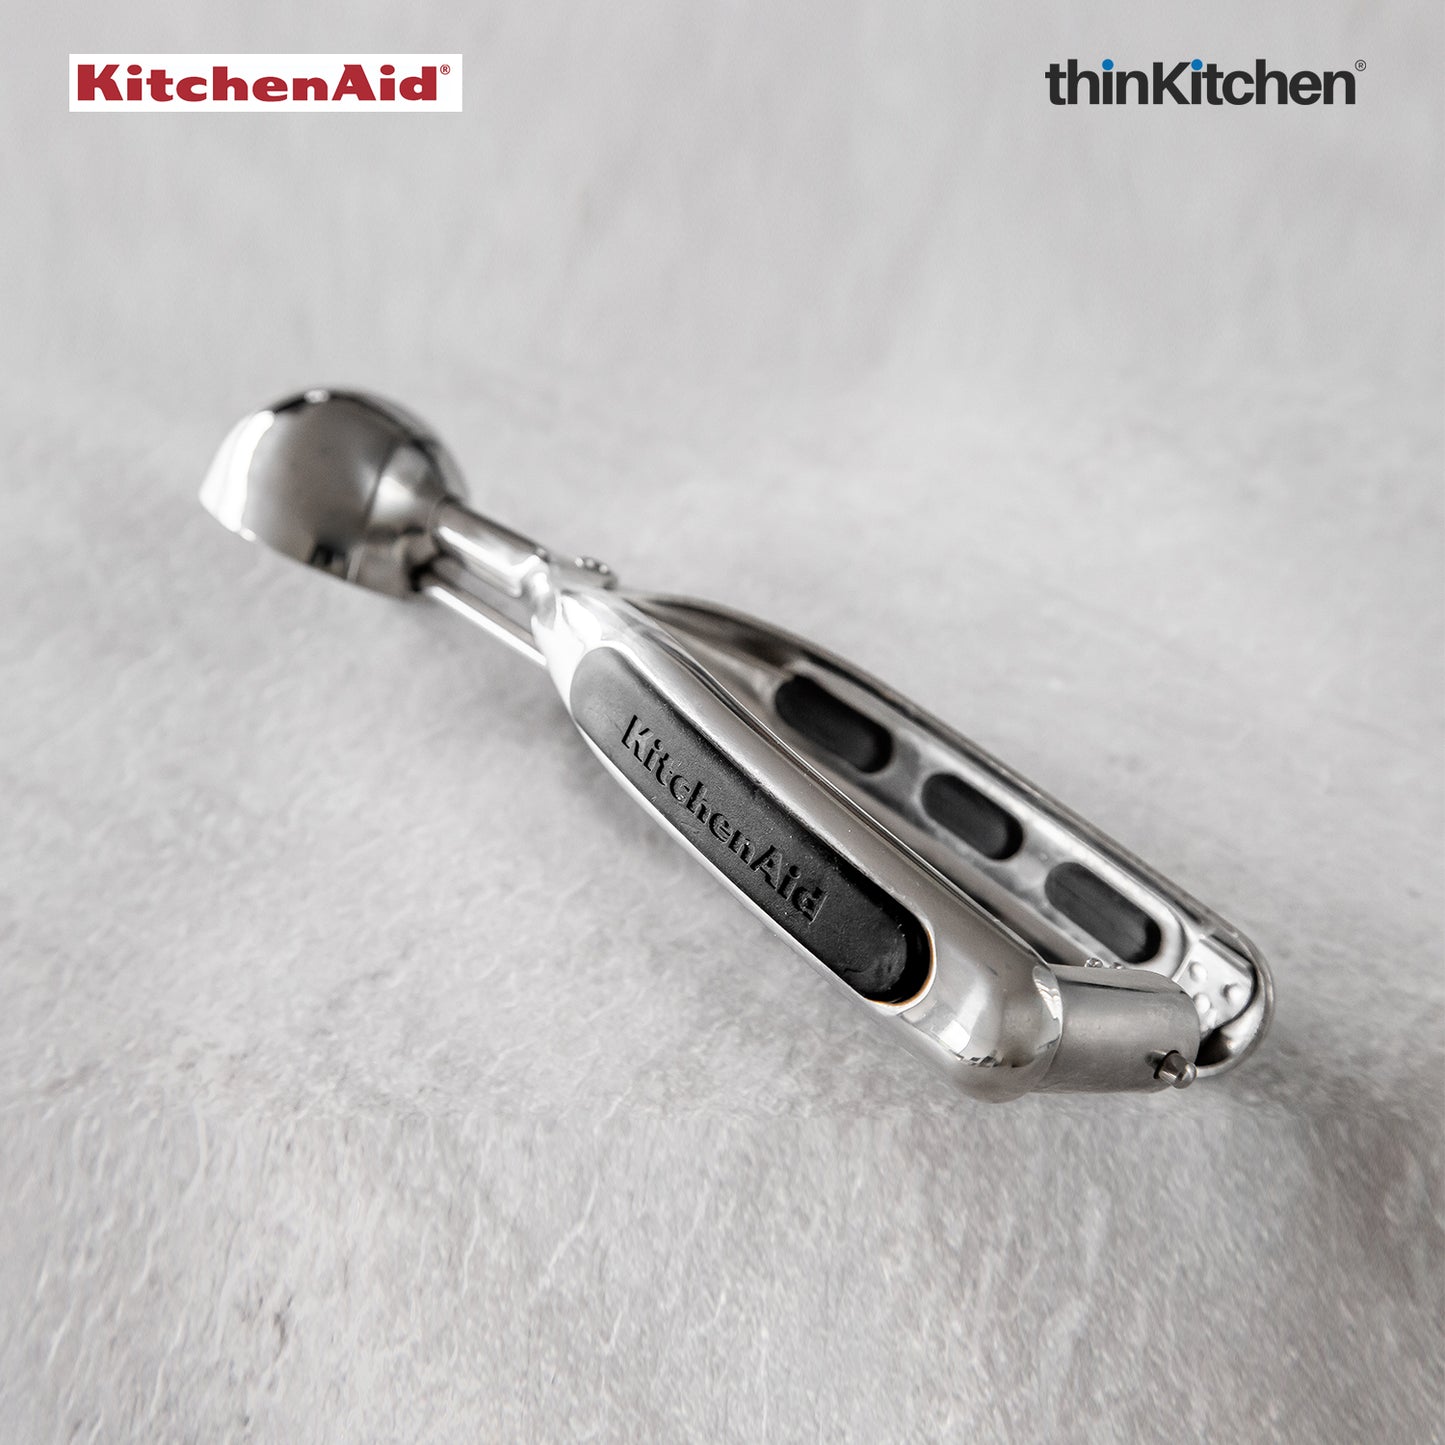 Kitchenaid Satinless Steel Ice Cream Scoop With Trigger